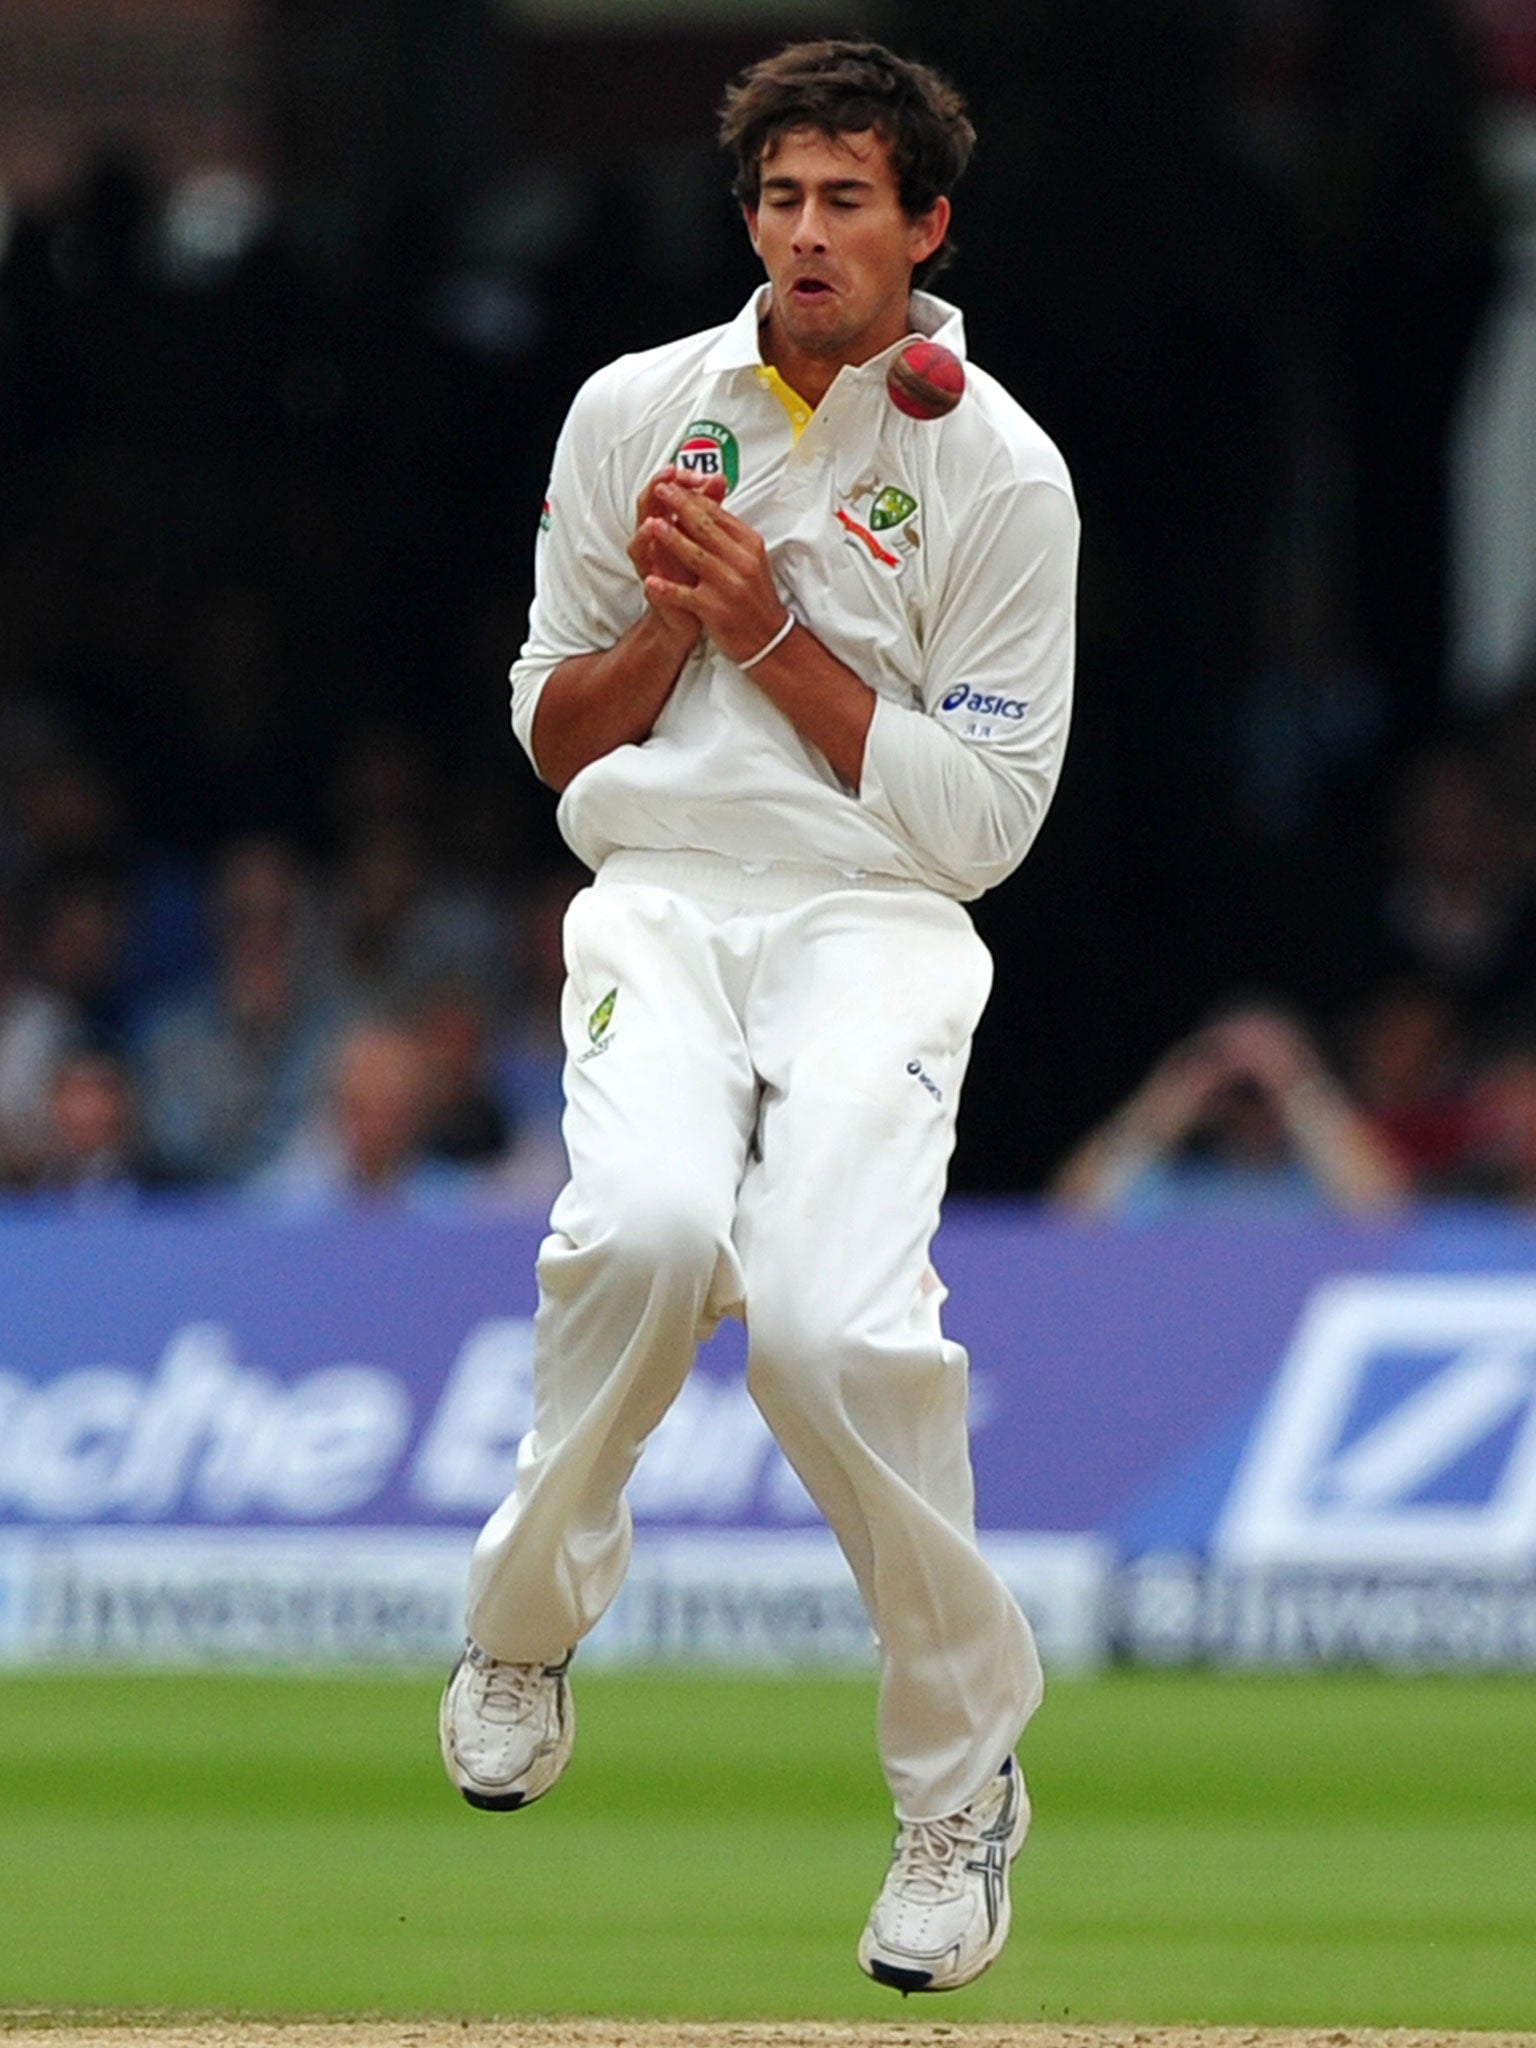 Ashton Agar lets slip a chance to claim Matt Prior’s wicket